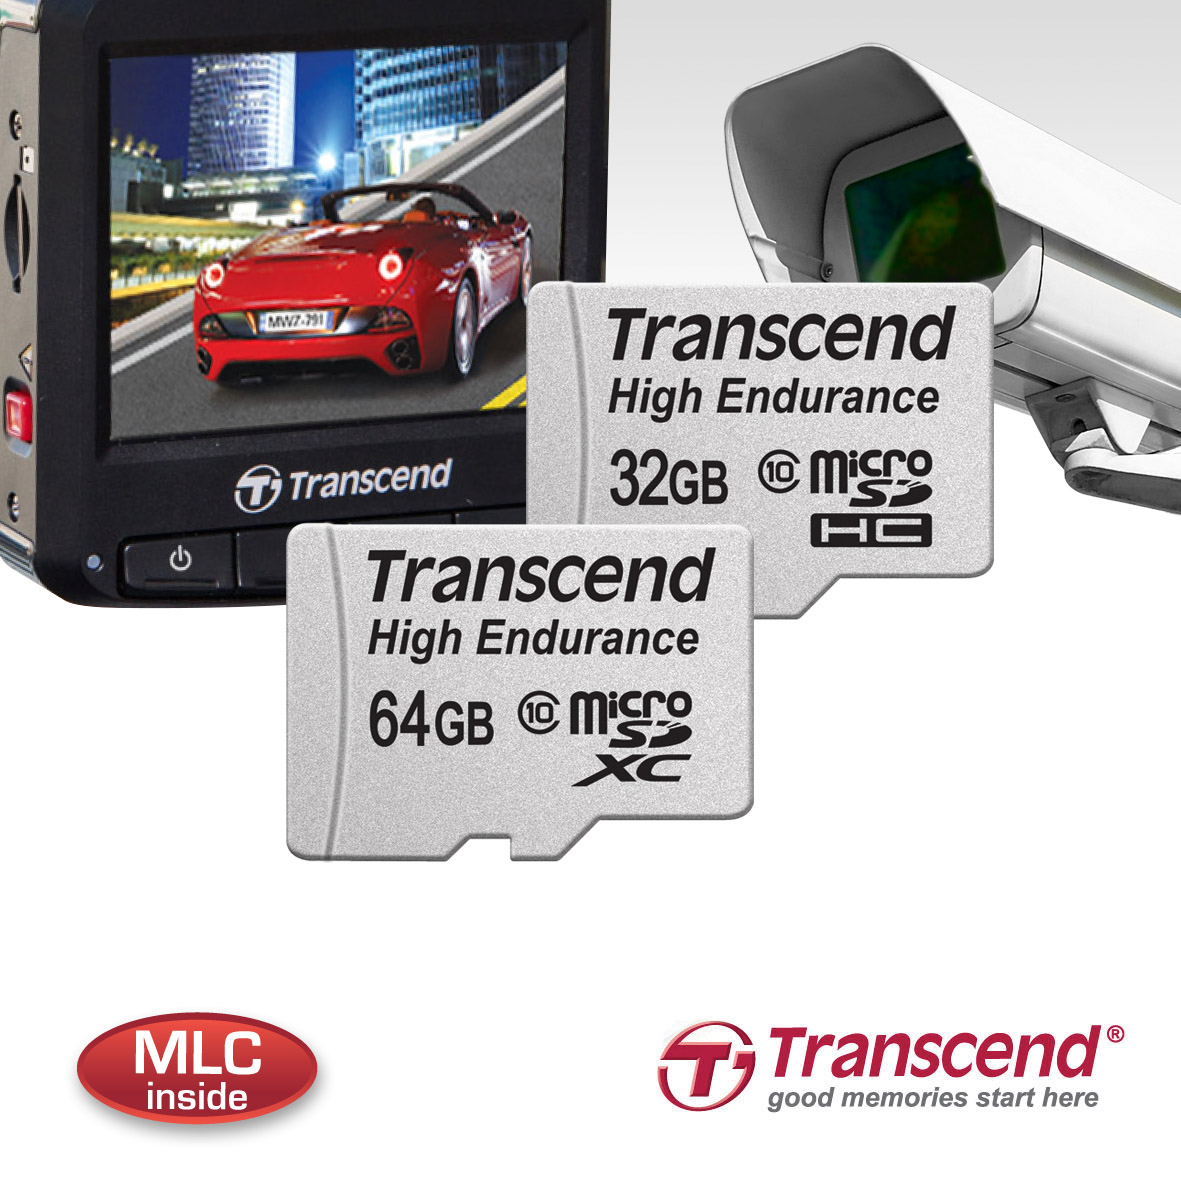 Transcend High Endurance microSDHC/SDXC Memory Cards